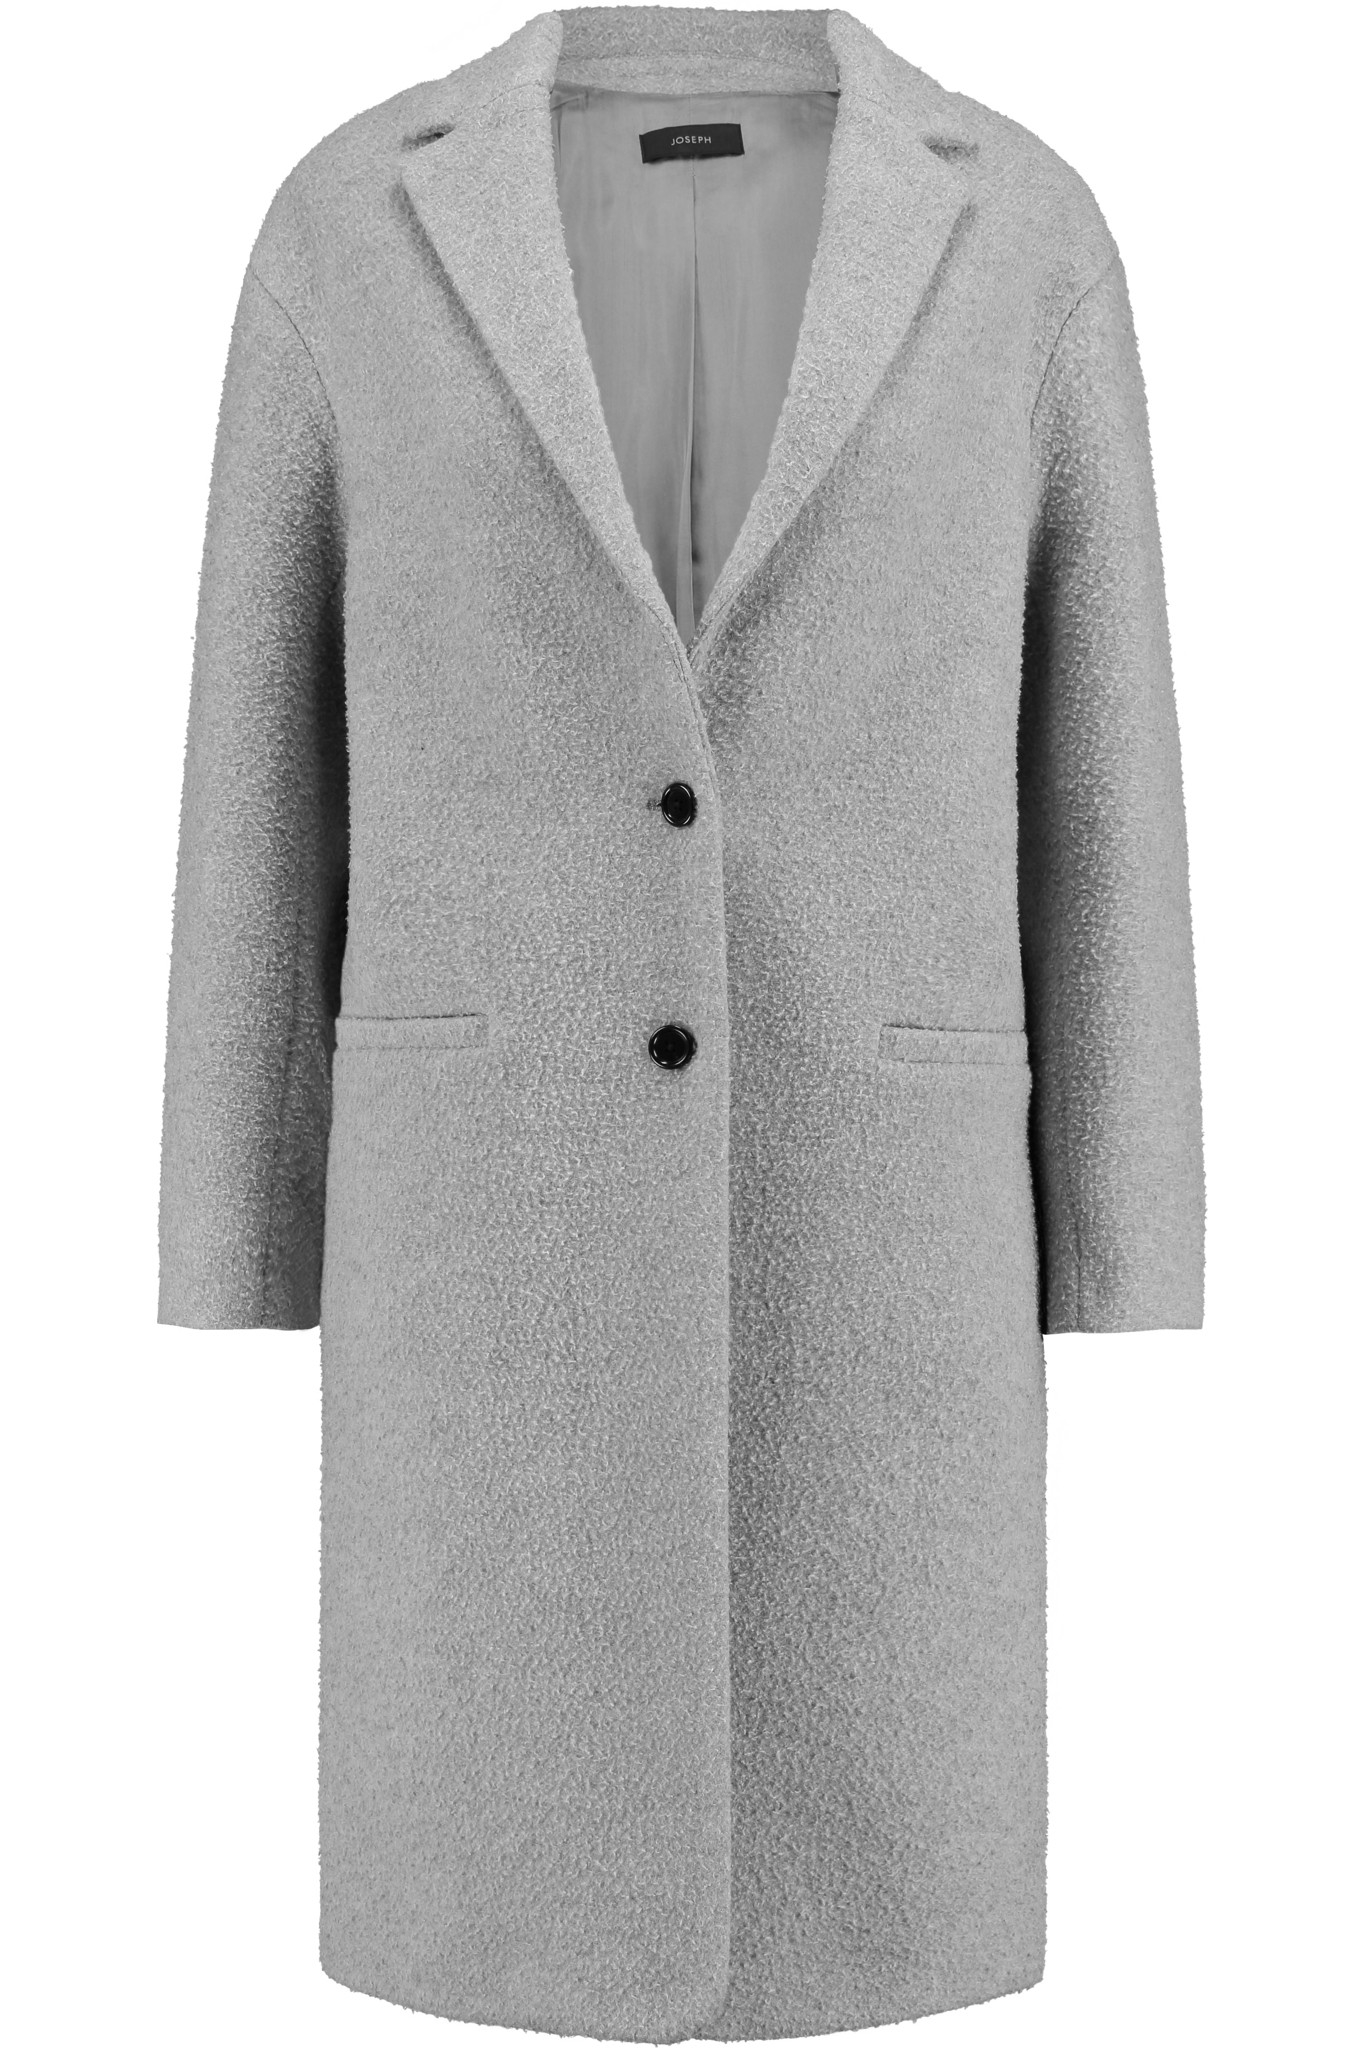 JOSEPH Teddy Textured Wool-blend Coat in Gray - Lyst